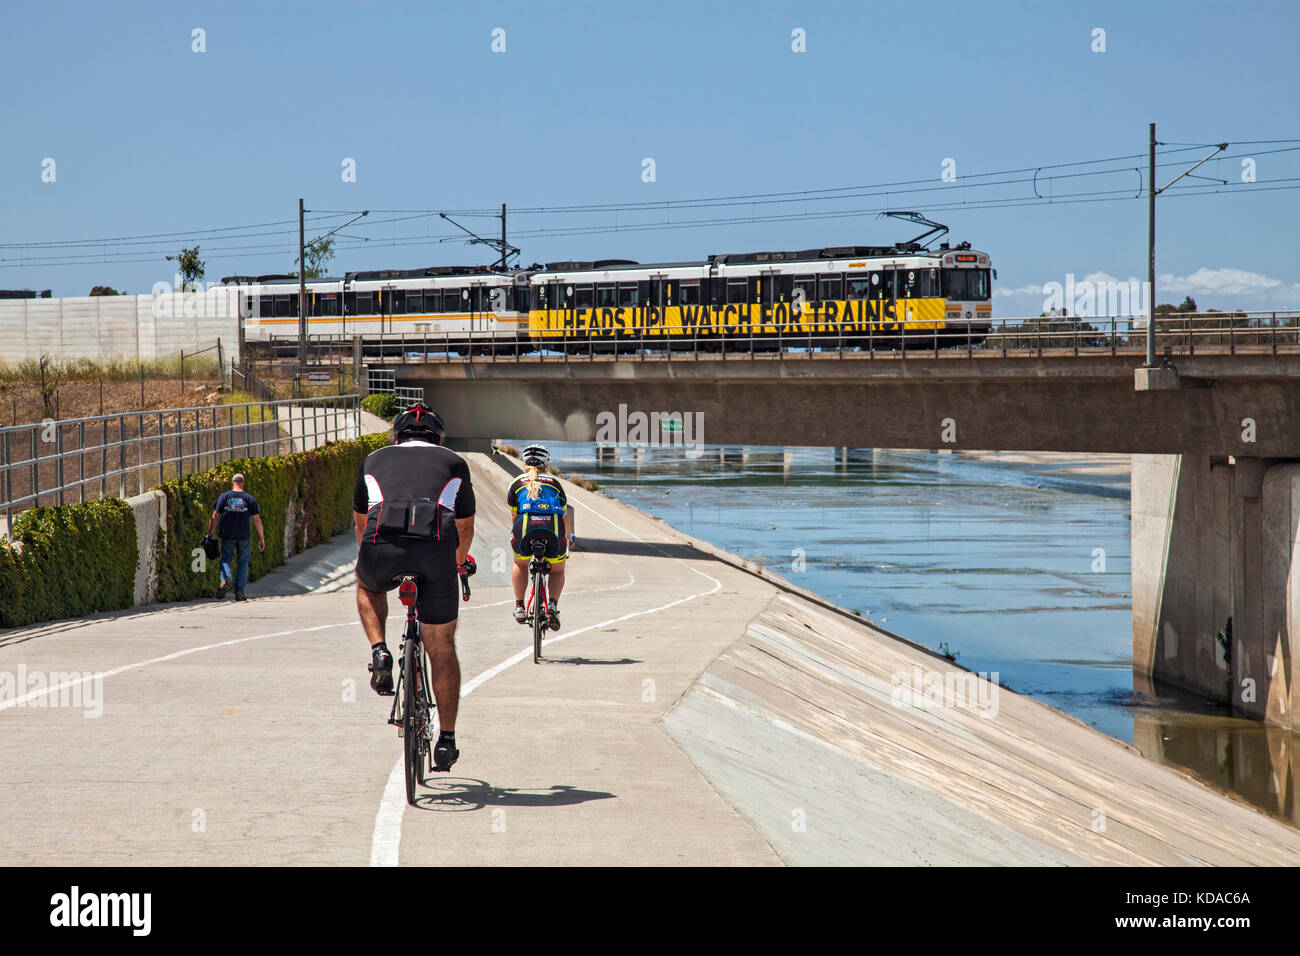 Los Angeles Metro Rail going over bike path along Los Angeles River, Long Beach, California, USA Stock Photo